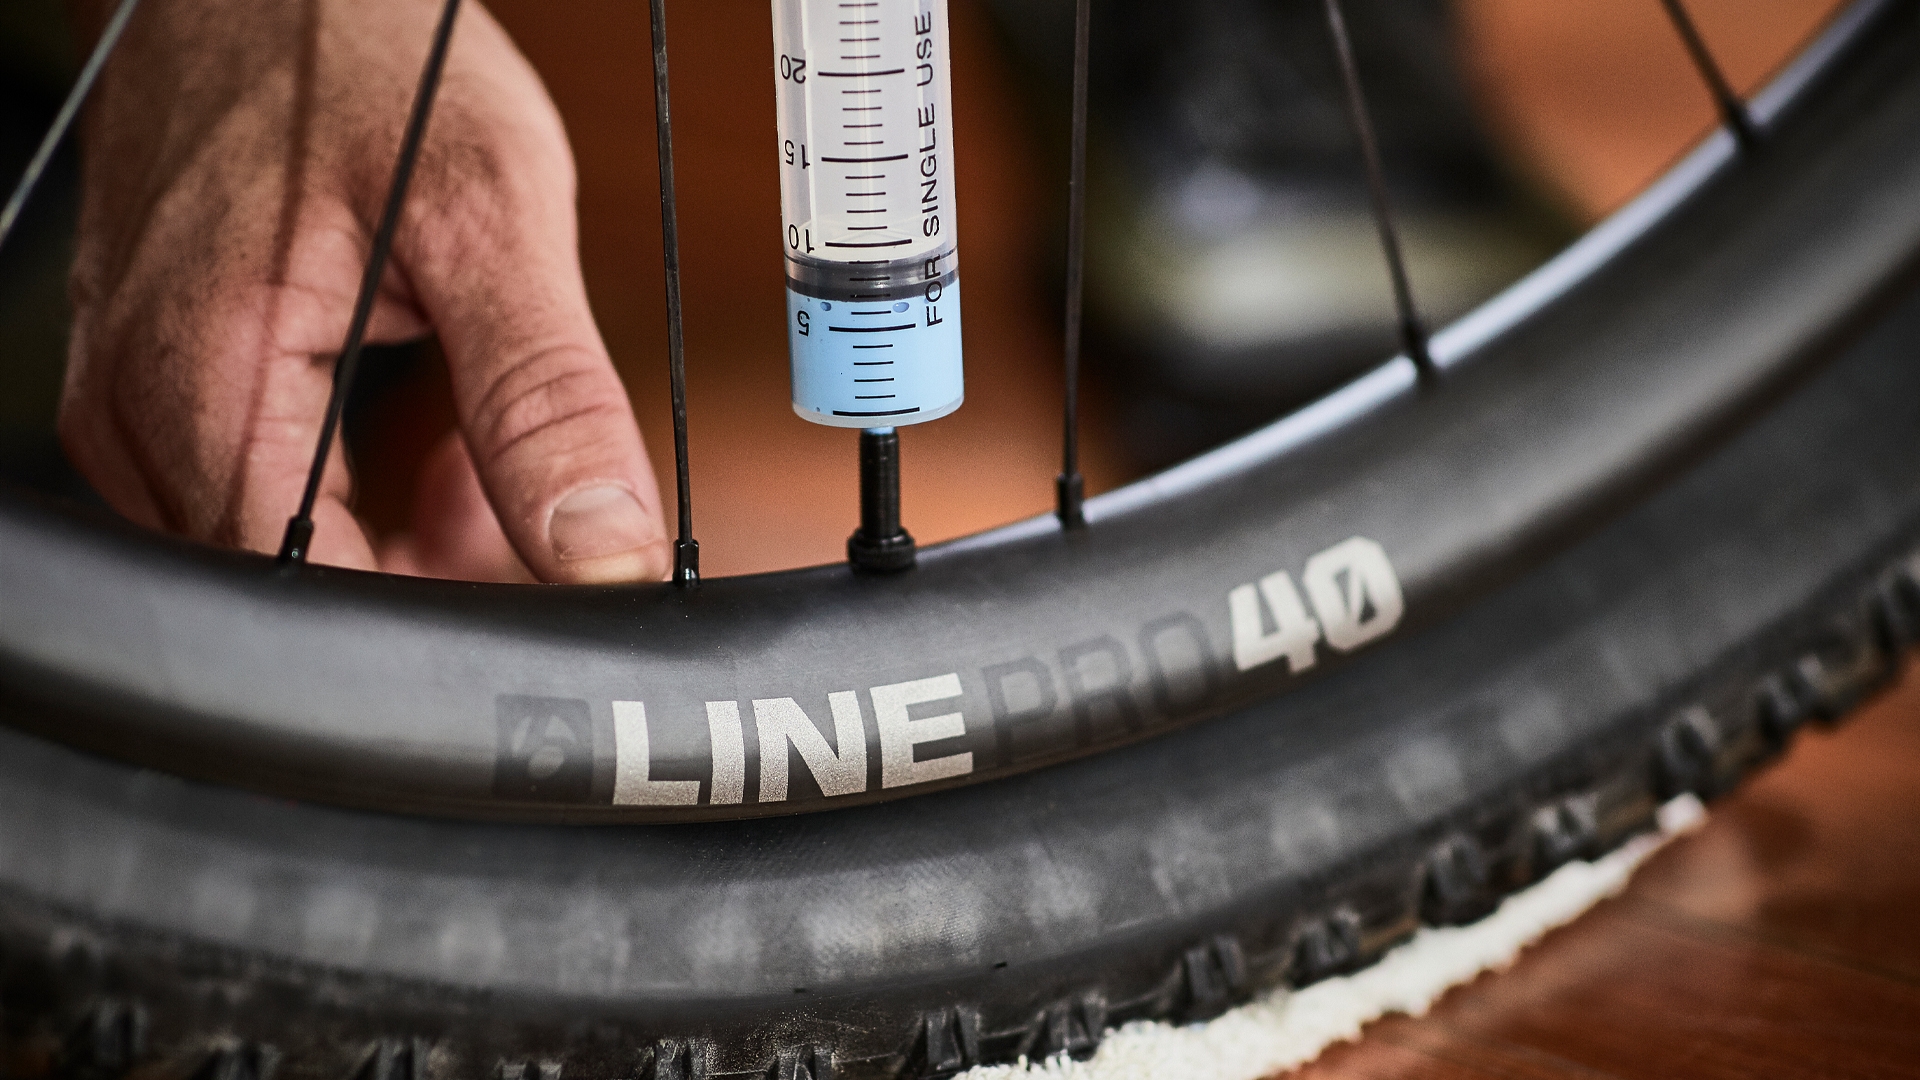 tubeless bicycle tyres